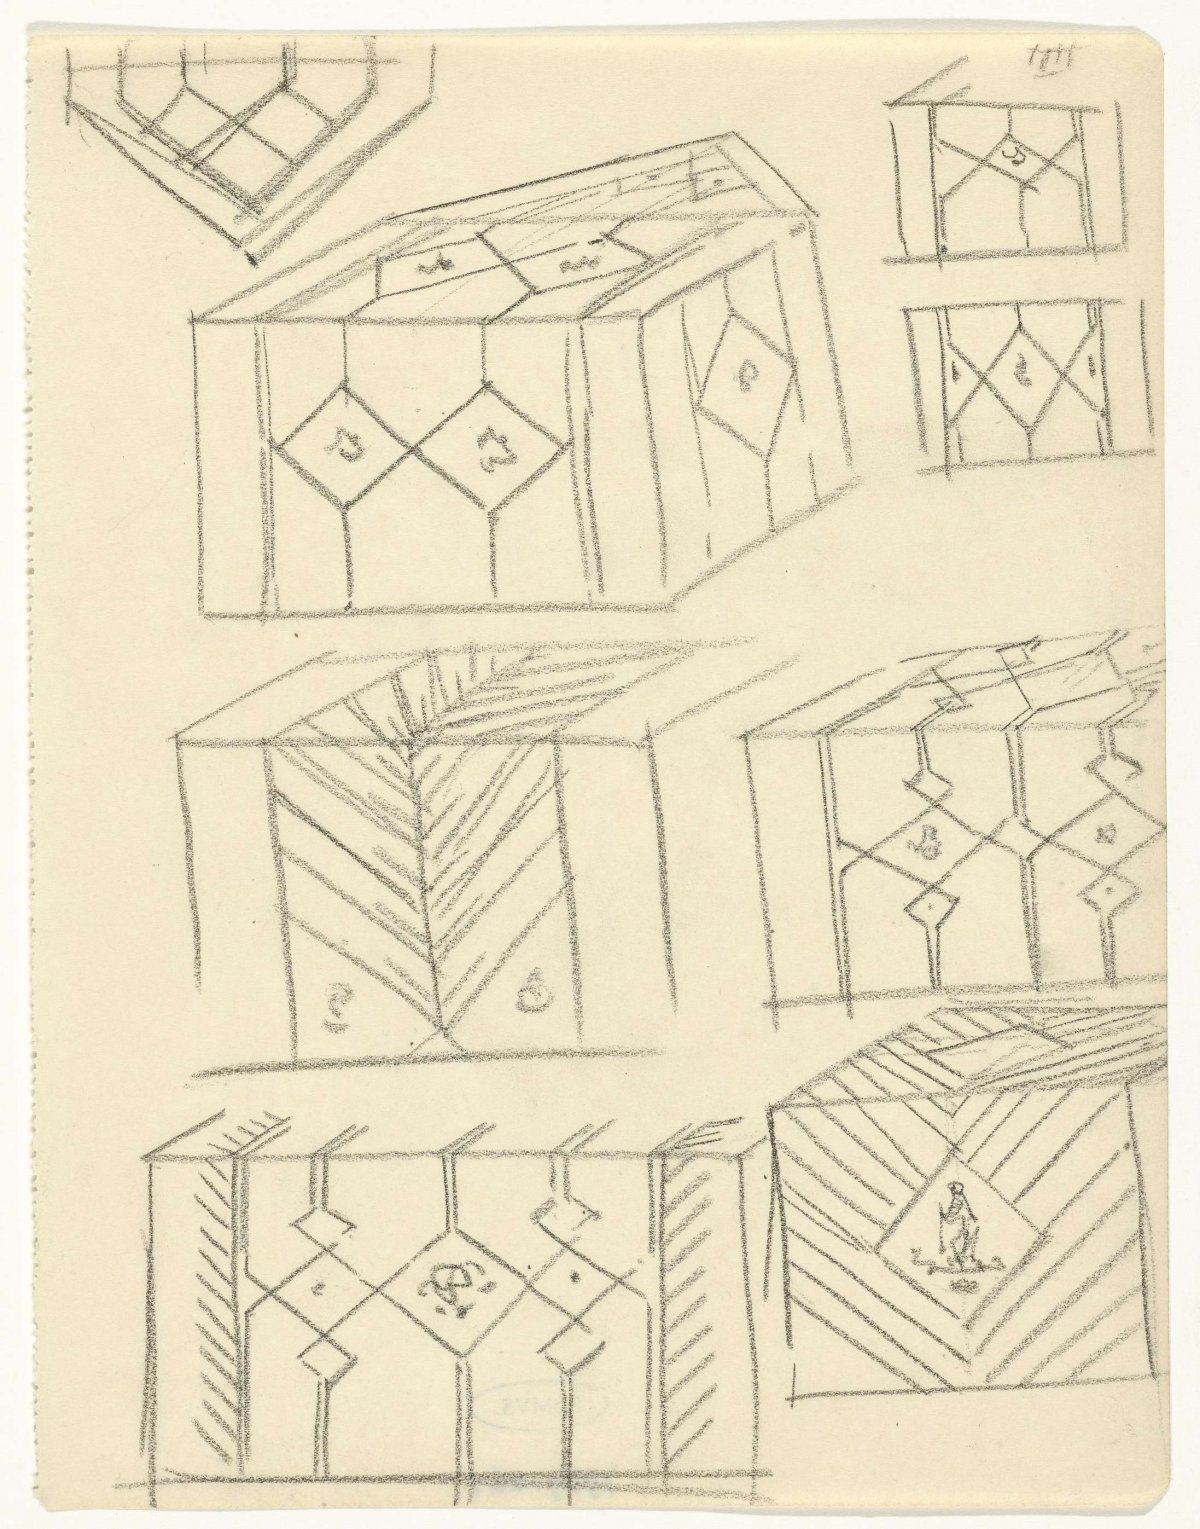 Ornament designs on blocks, Gerrit Willem Dijsselhof, 1876 - 1924